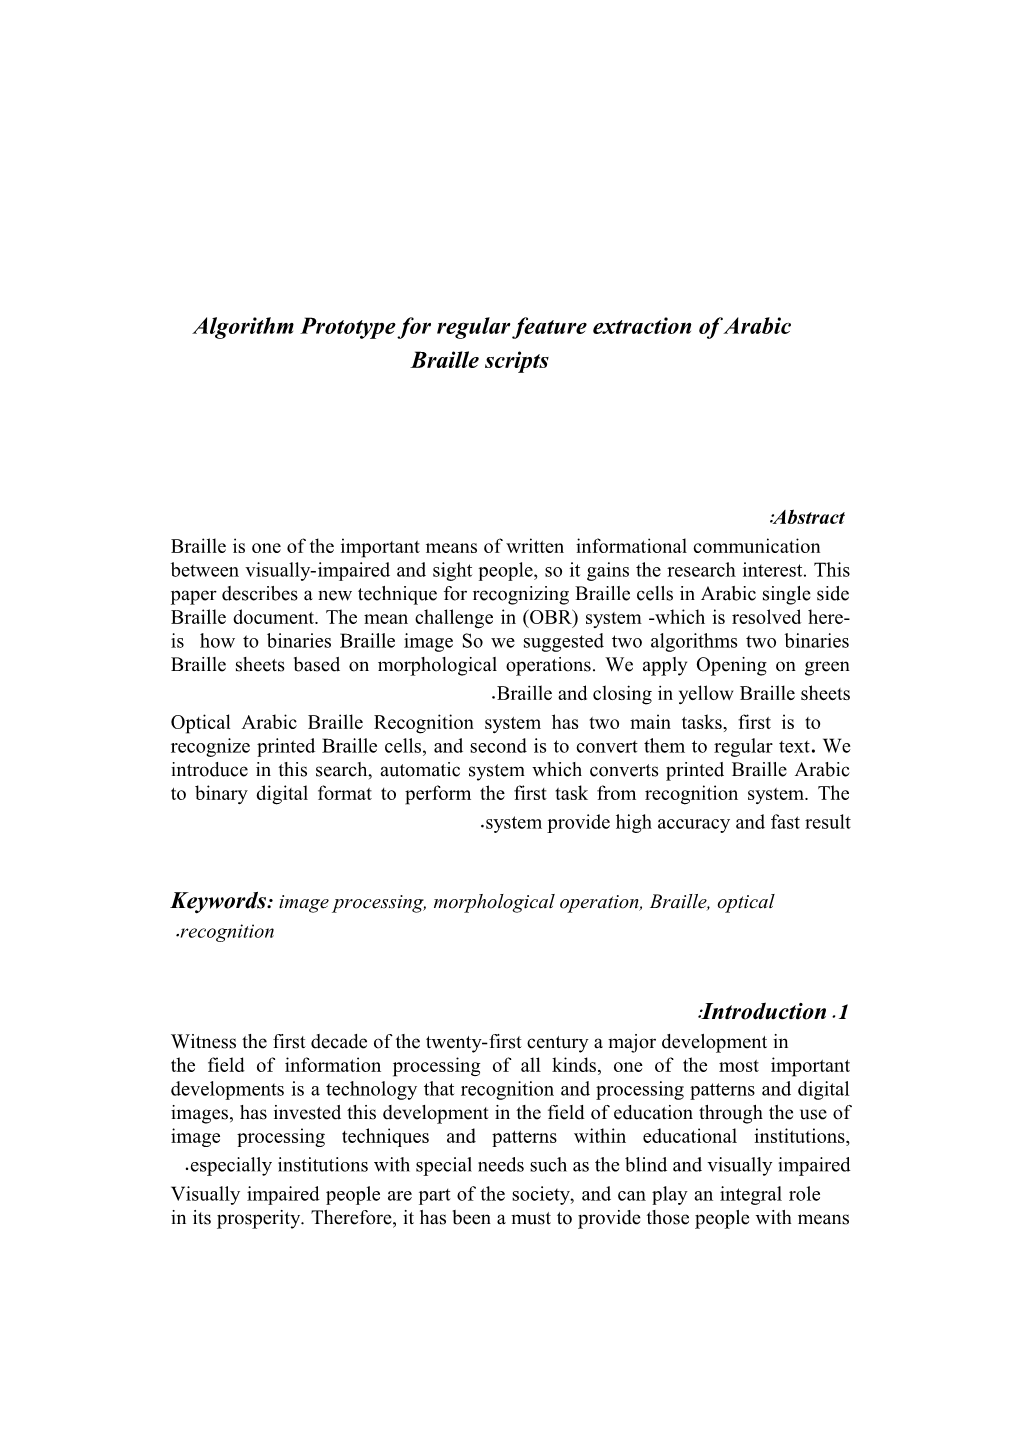 Algorithm Prototype for Regular Feature Extraction of Arabicbraillescripts